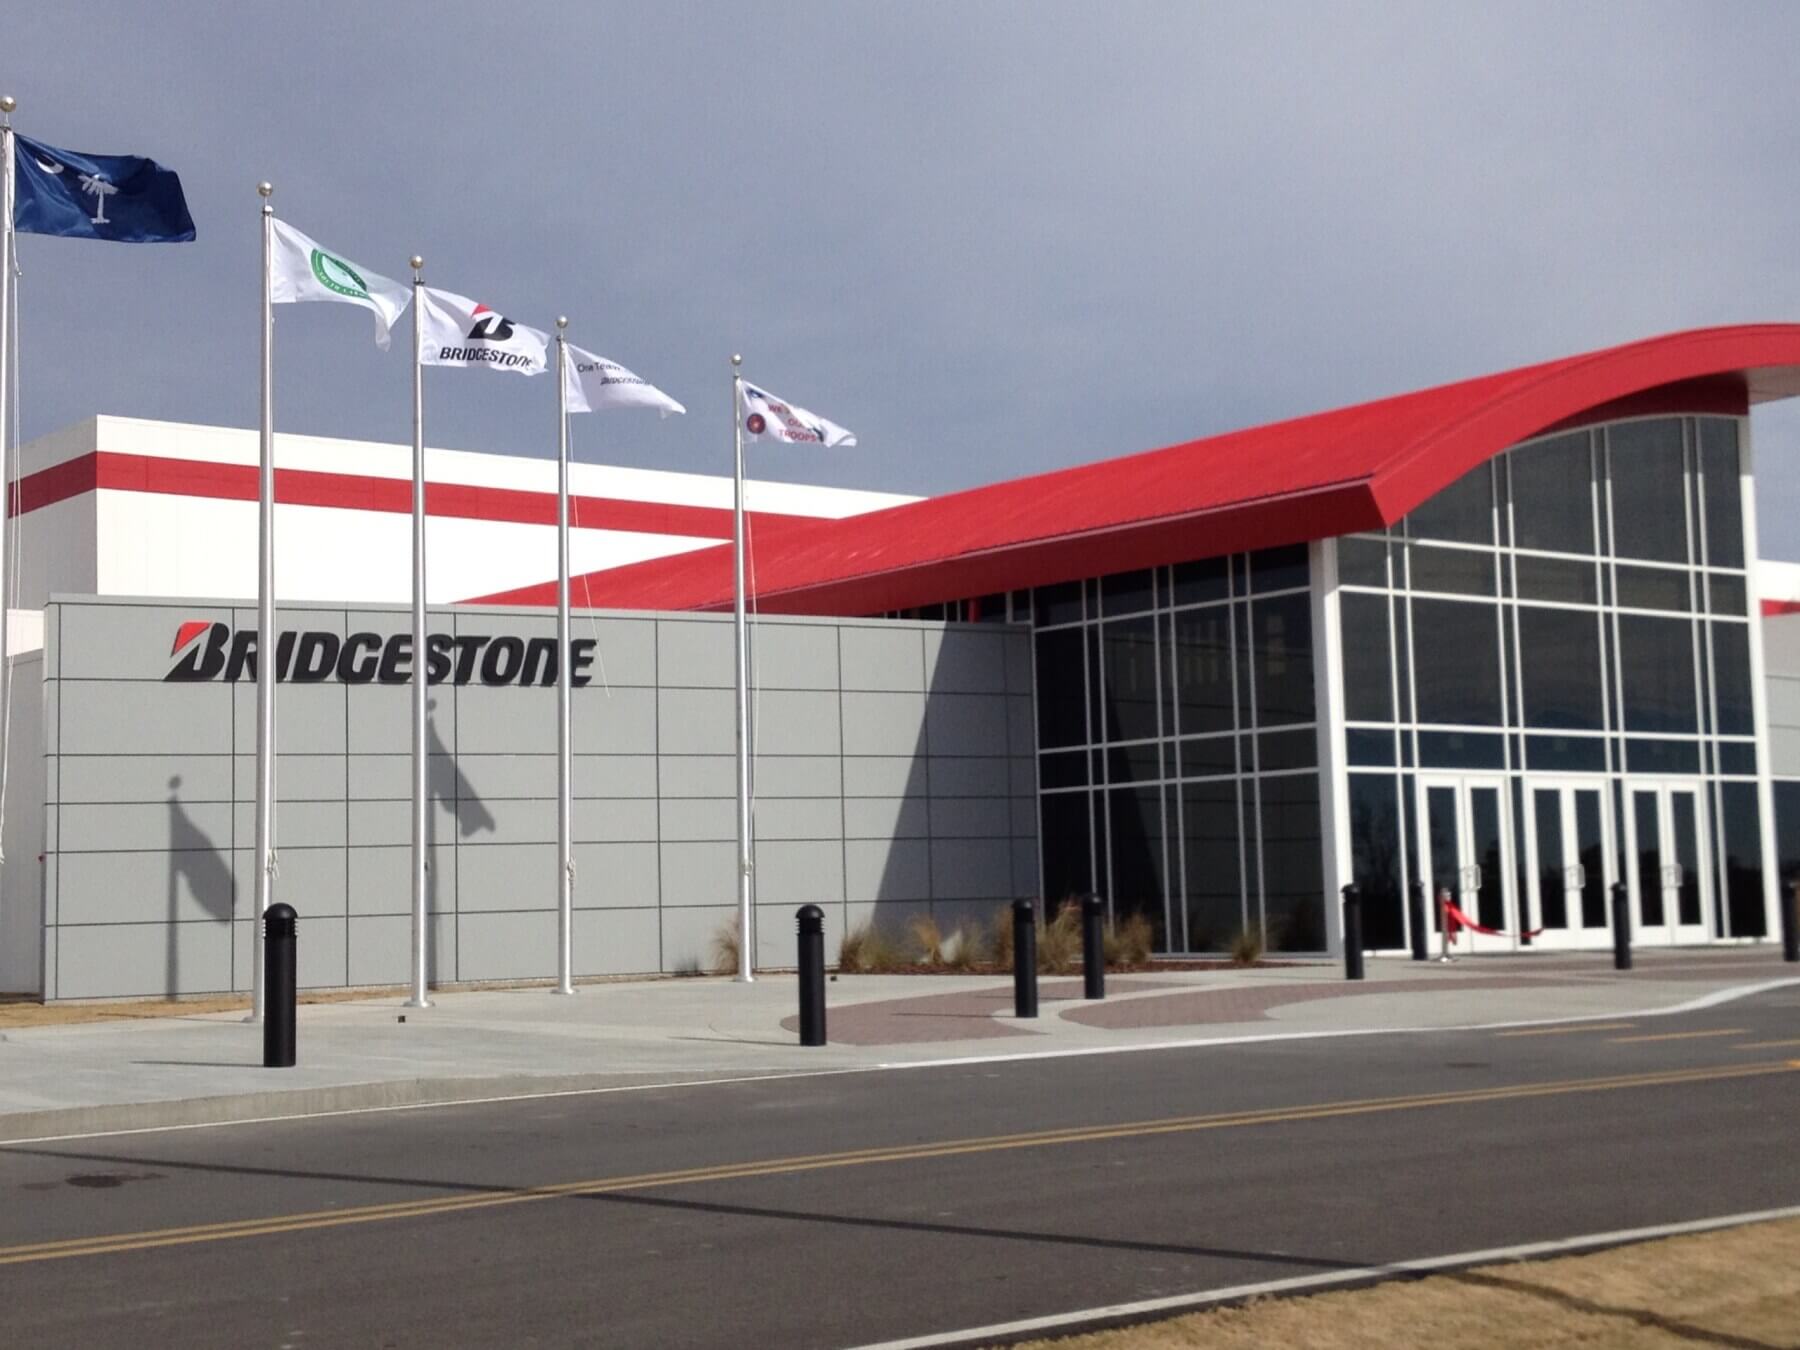 the entrance of the Bridgestone Americas off-road radial tire plant